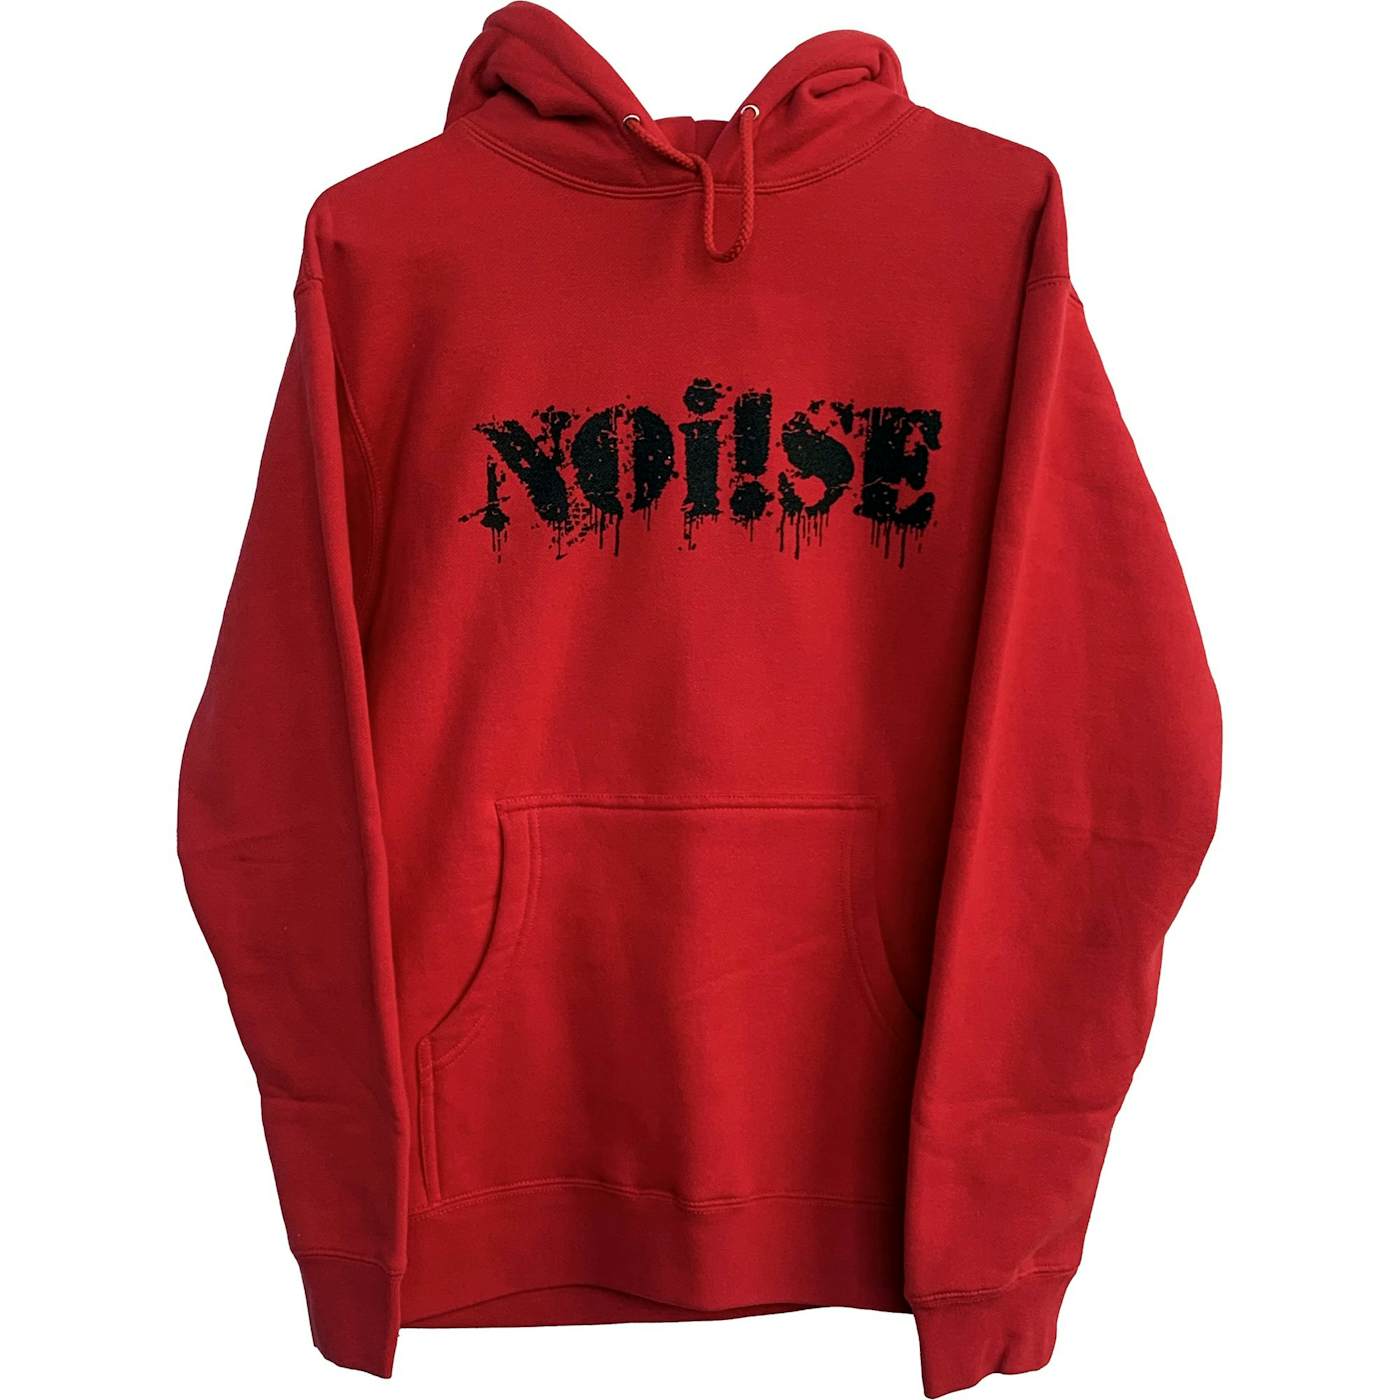 NOi!SE - Logo - Black On Red - Hooded Sweatshirt